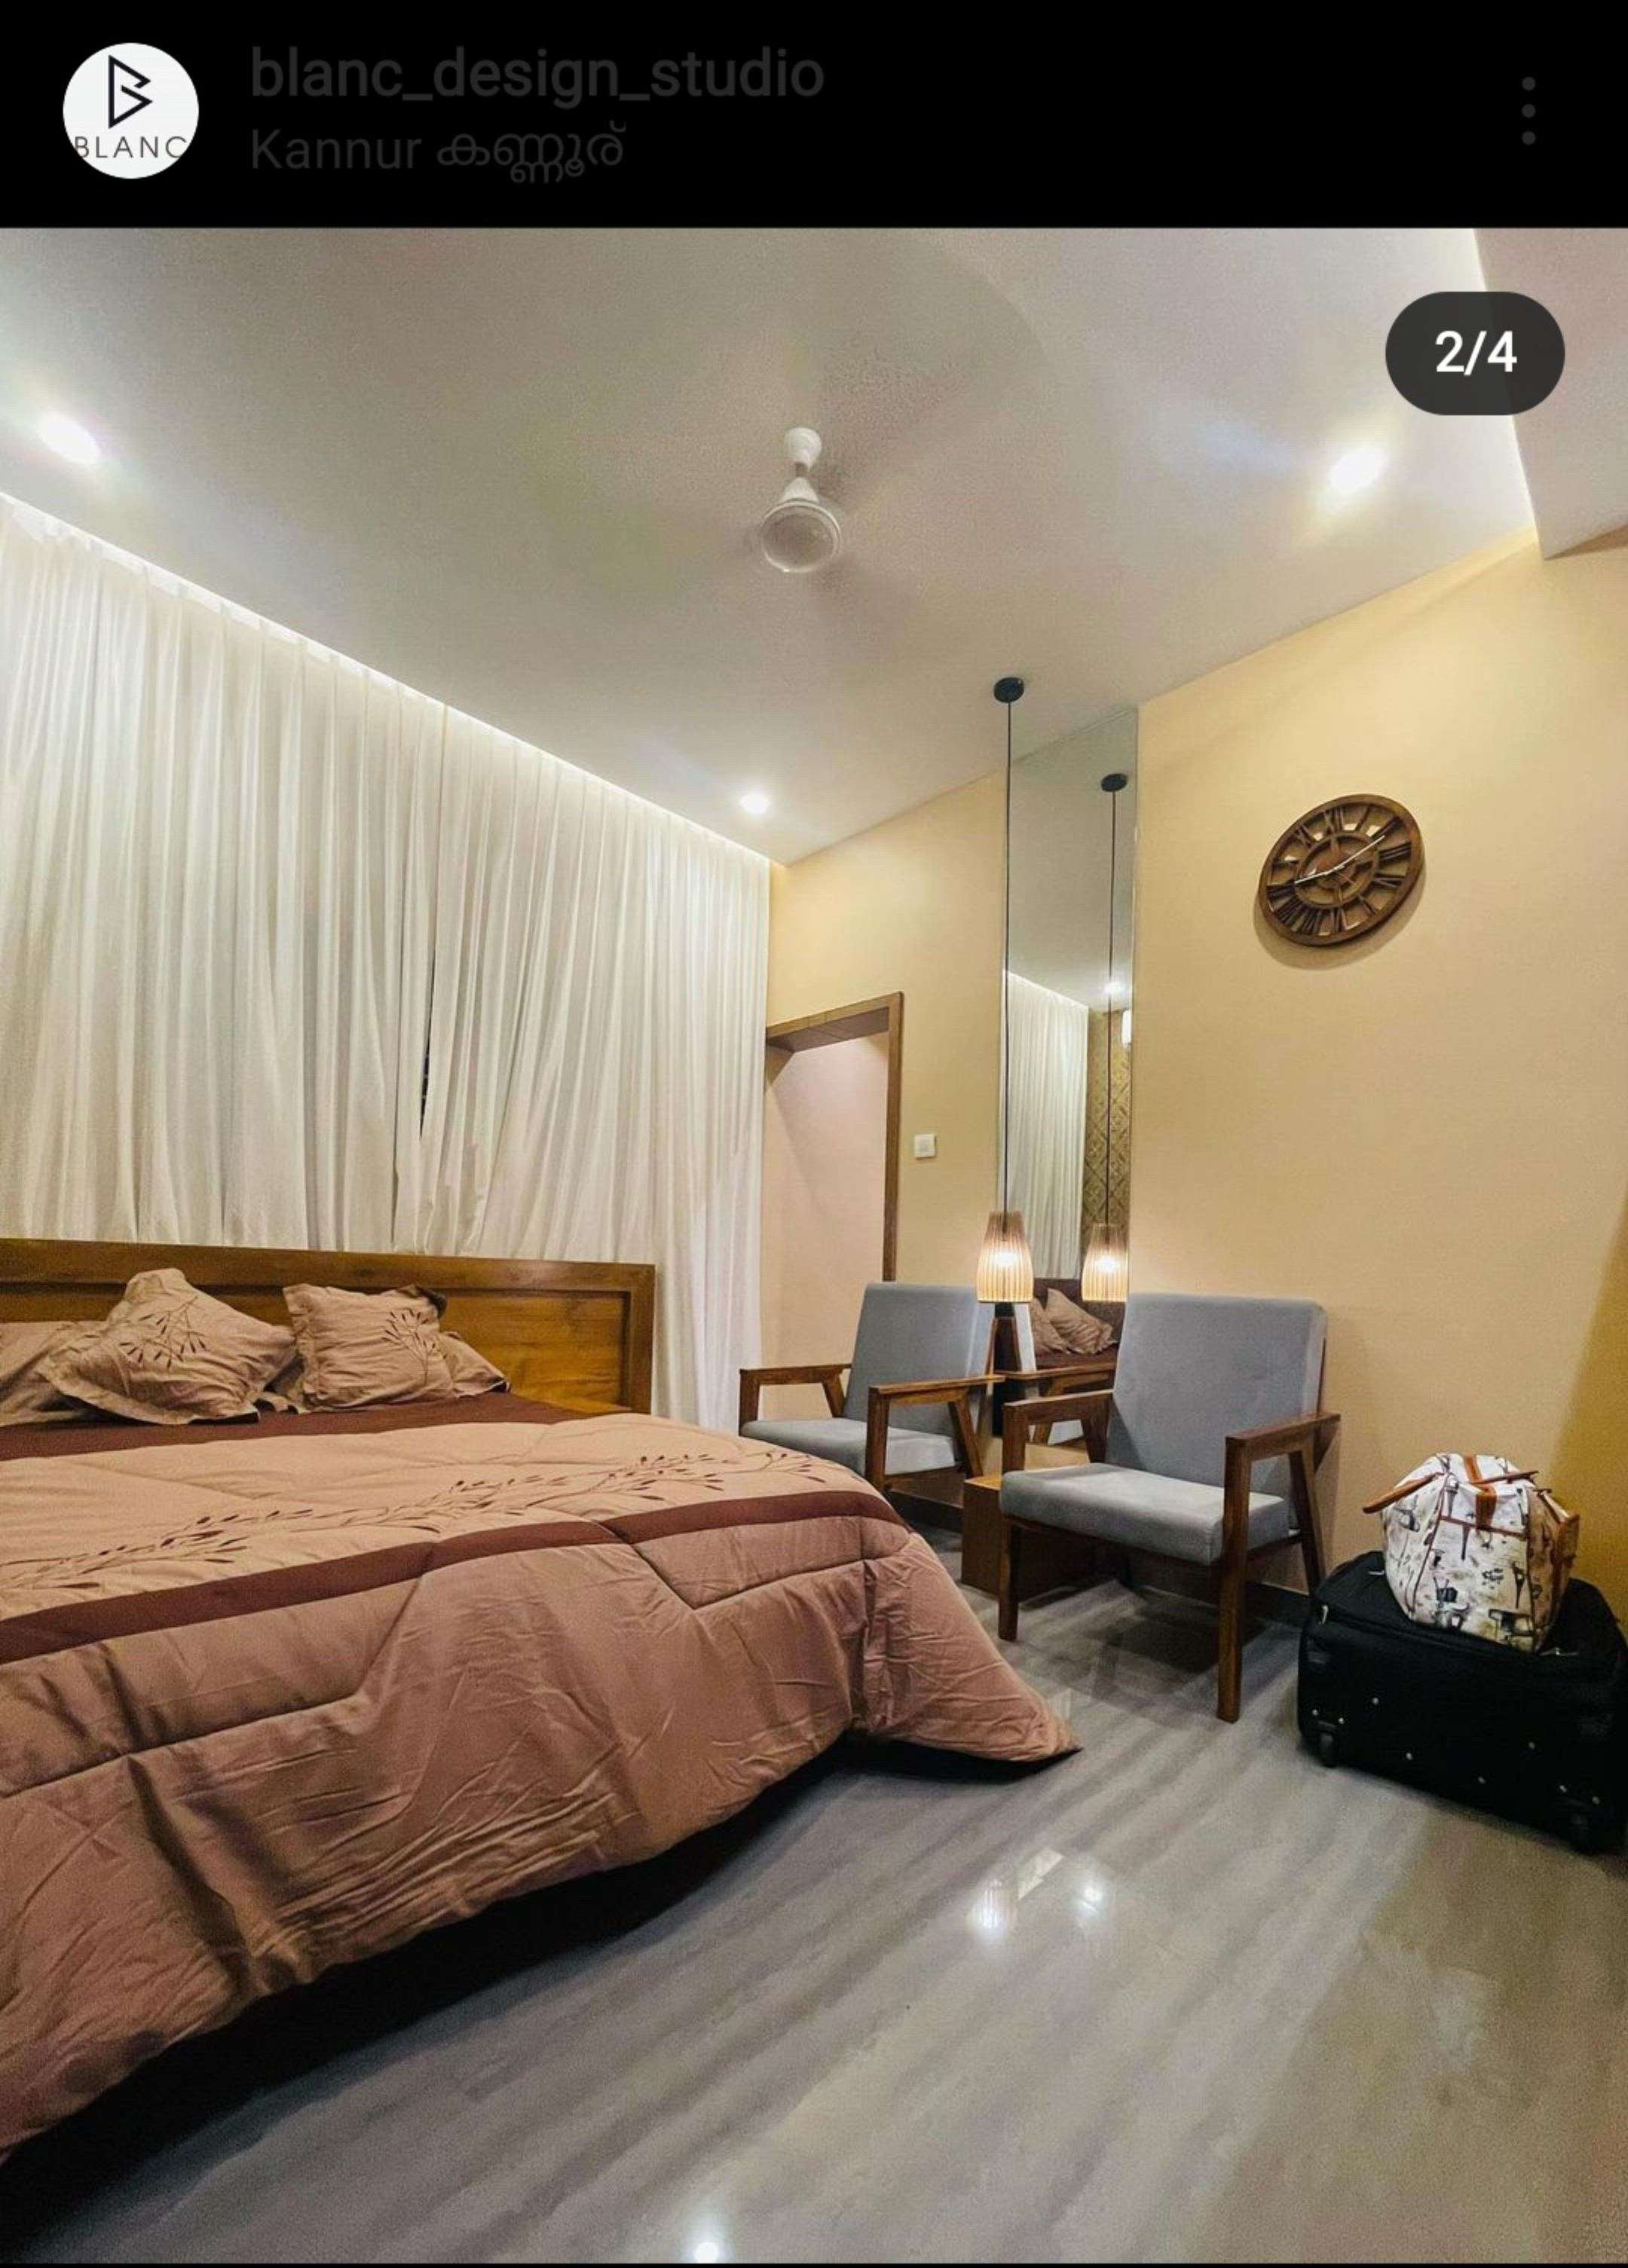 Budget friendly Bride Bedroom Completed. @Kannur #koloapp #Architectural&Interior #kannur #simple #blanc_designstudio